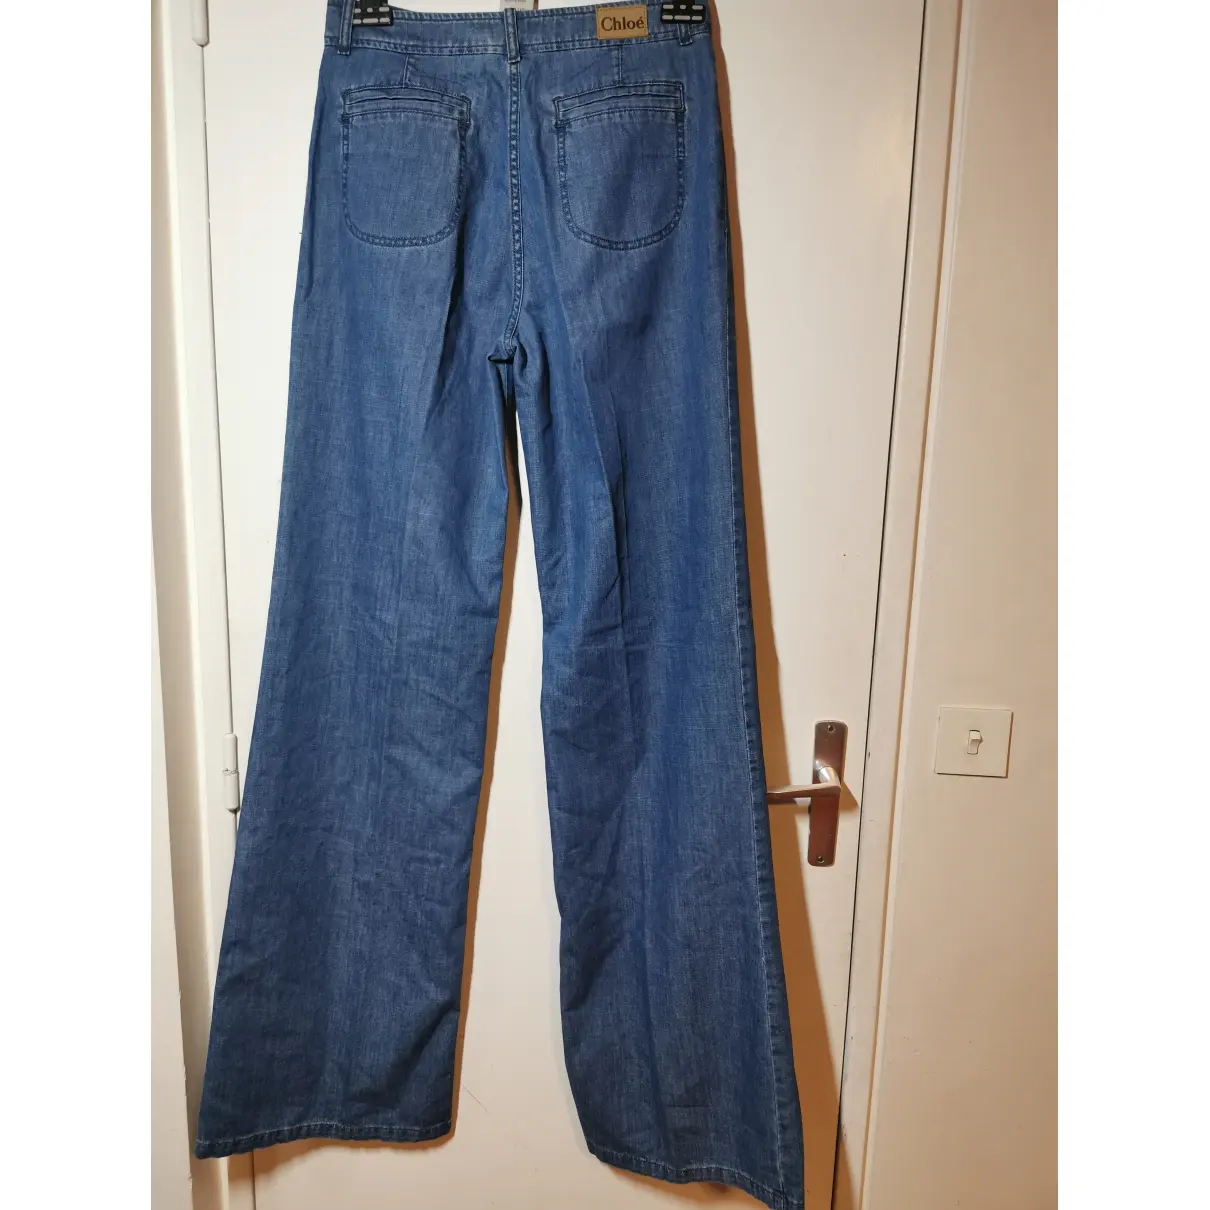 Buy Chloé Large jeans online - Vintage